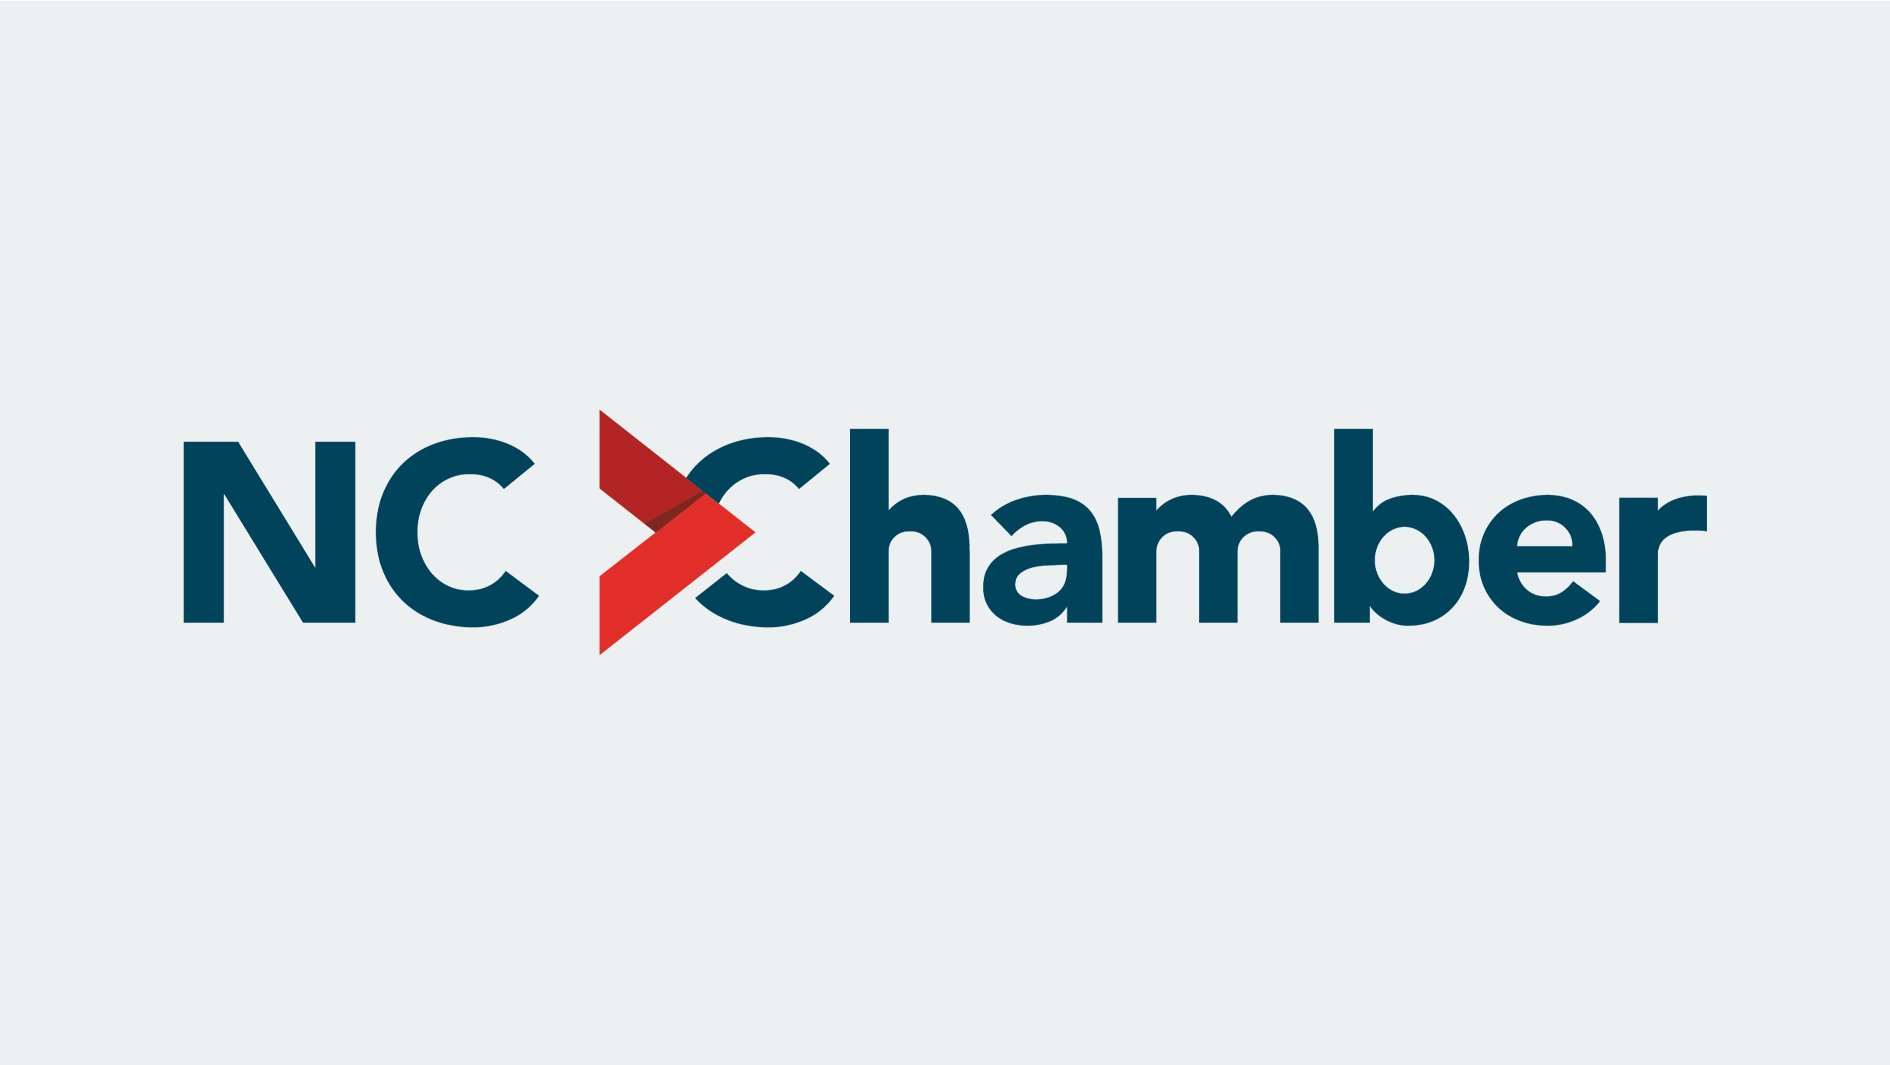 Clients-Logos-NCChamber.jpg